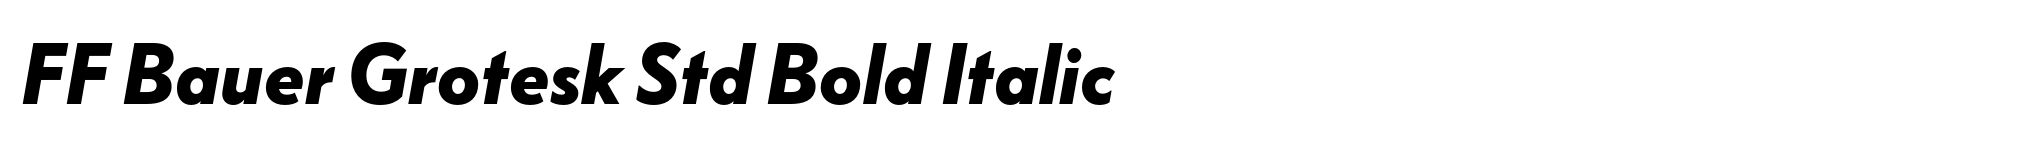 FF Bauer Grotesk Std Bold Italic image